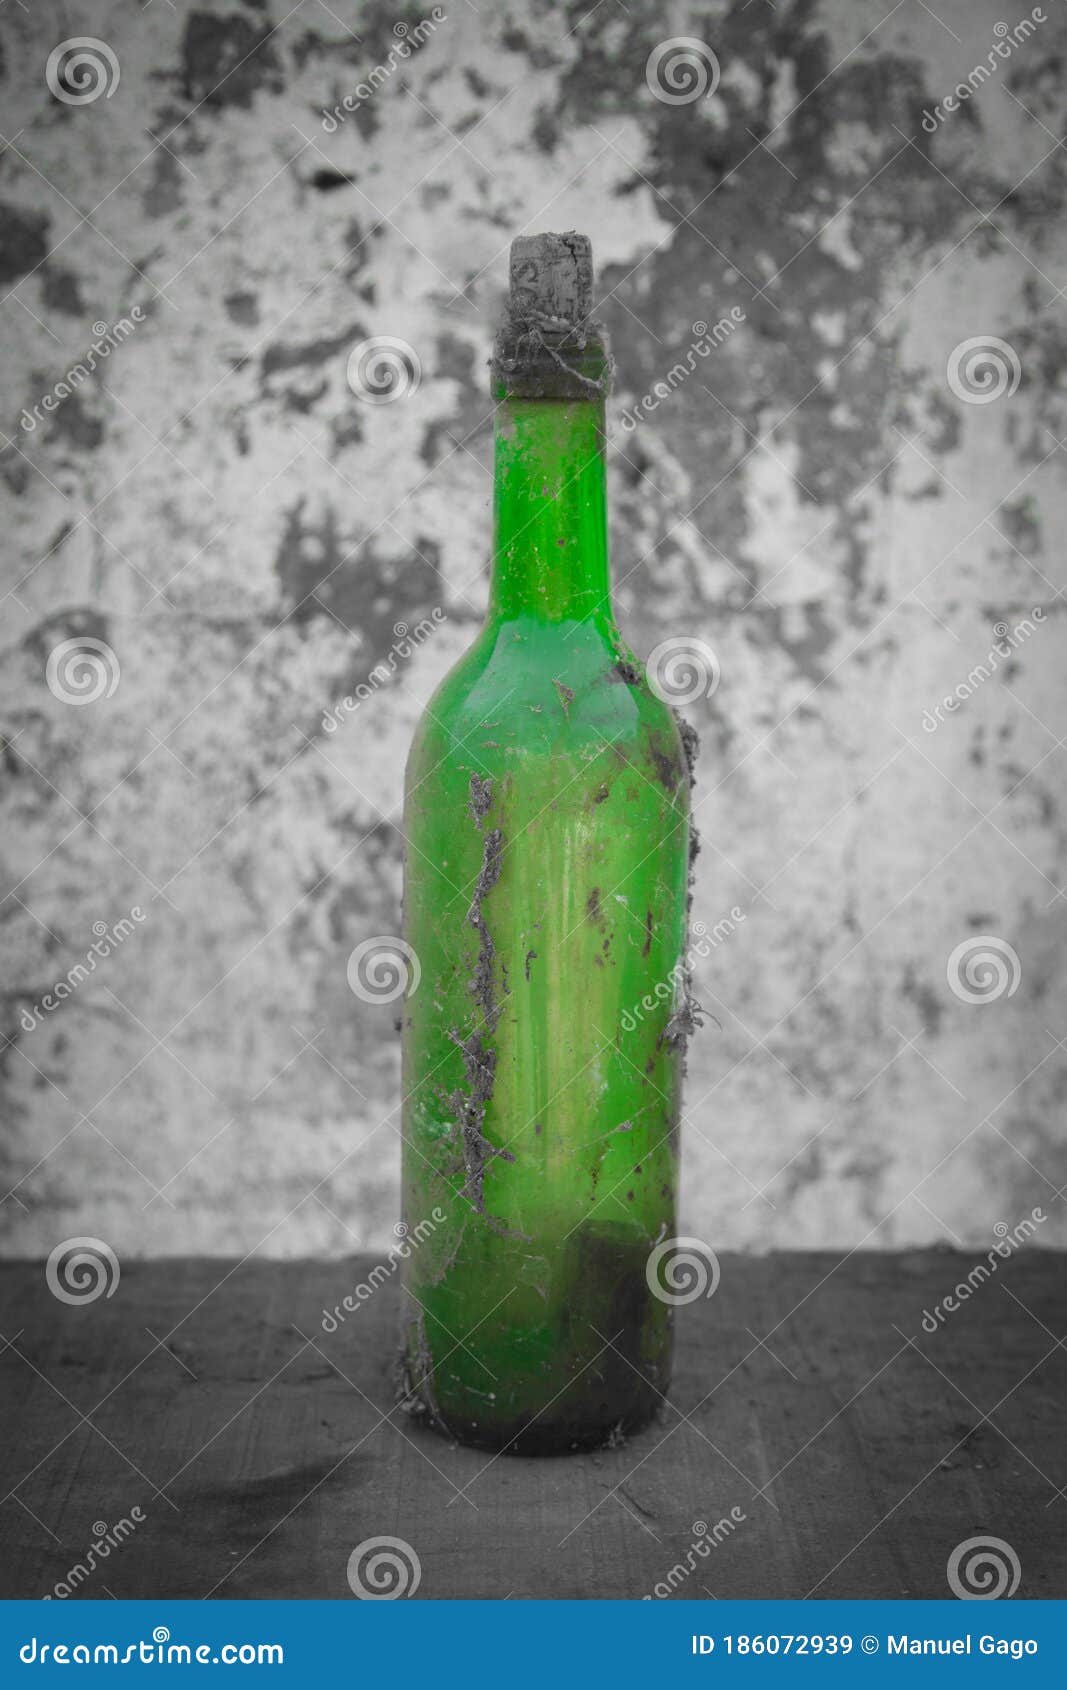 green moment, old bottle